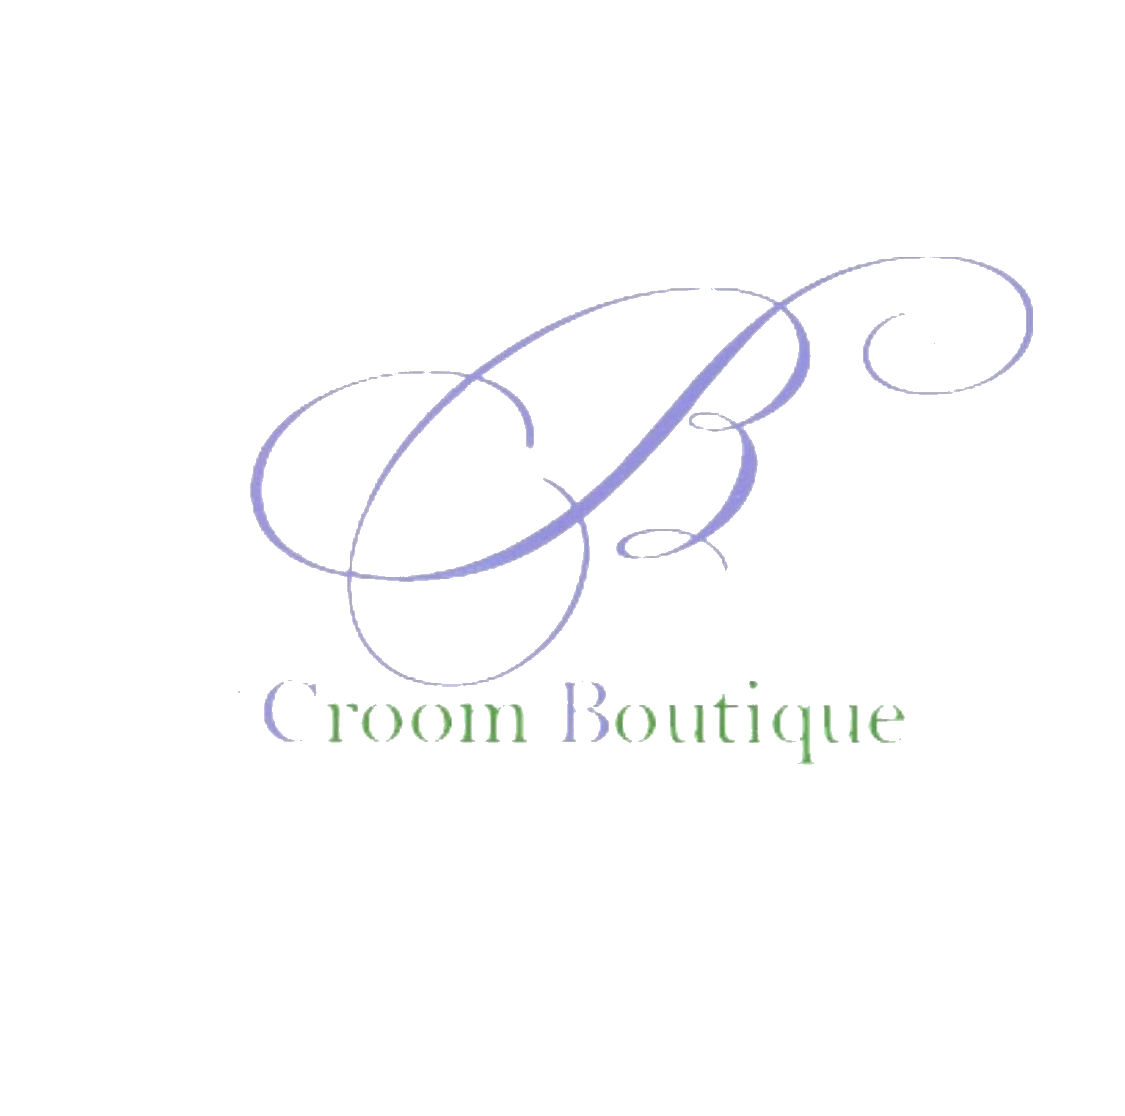 Croom Boutique Salon Logo